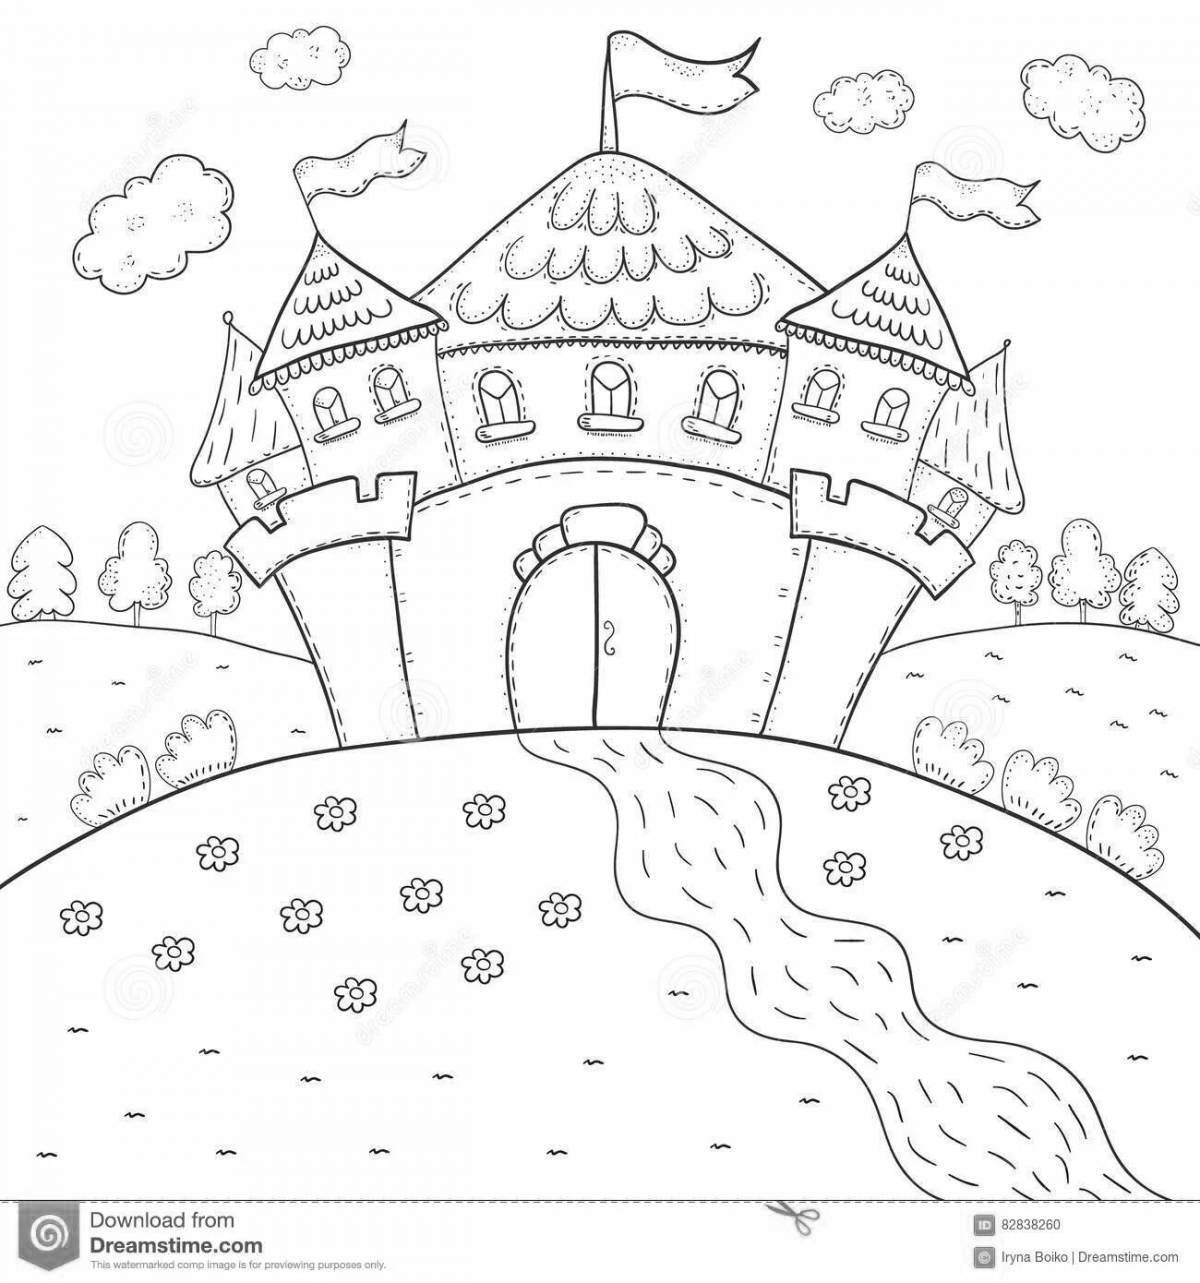 Coloring page magnanimous magic castle